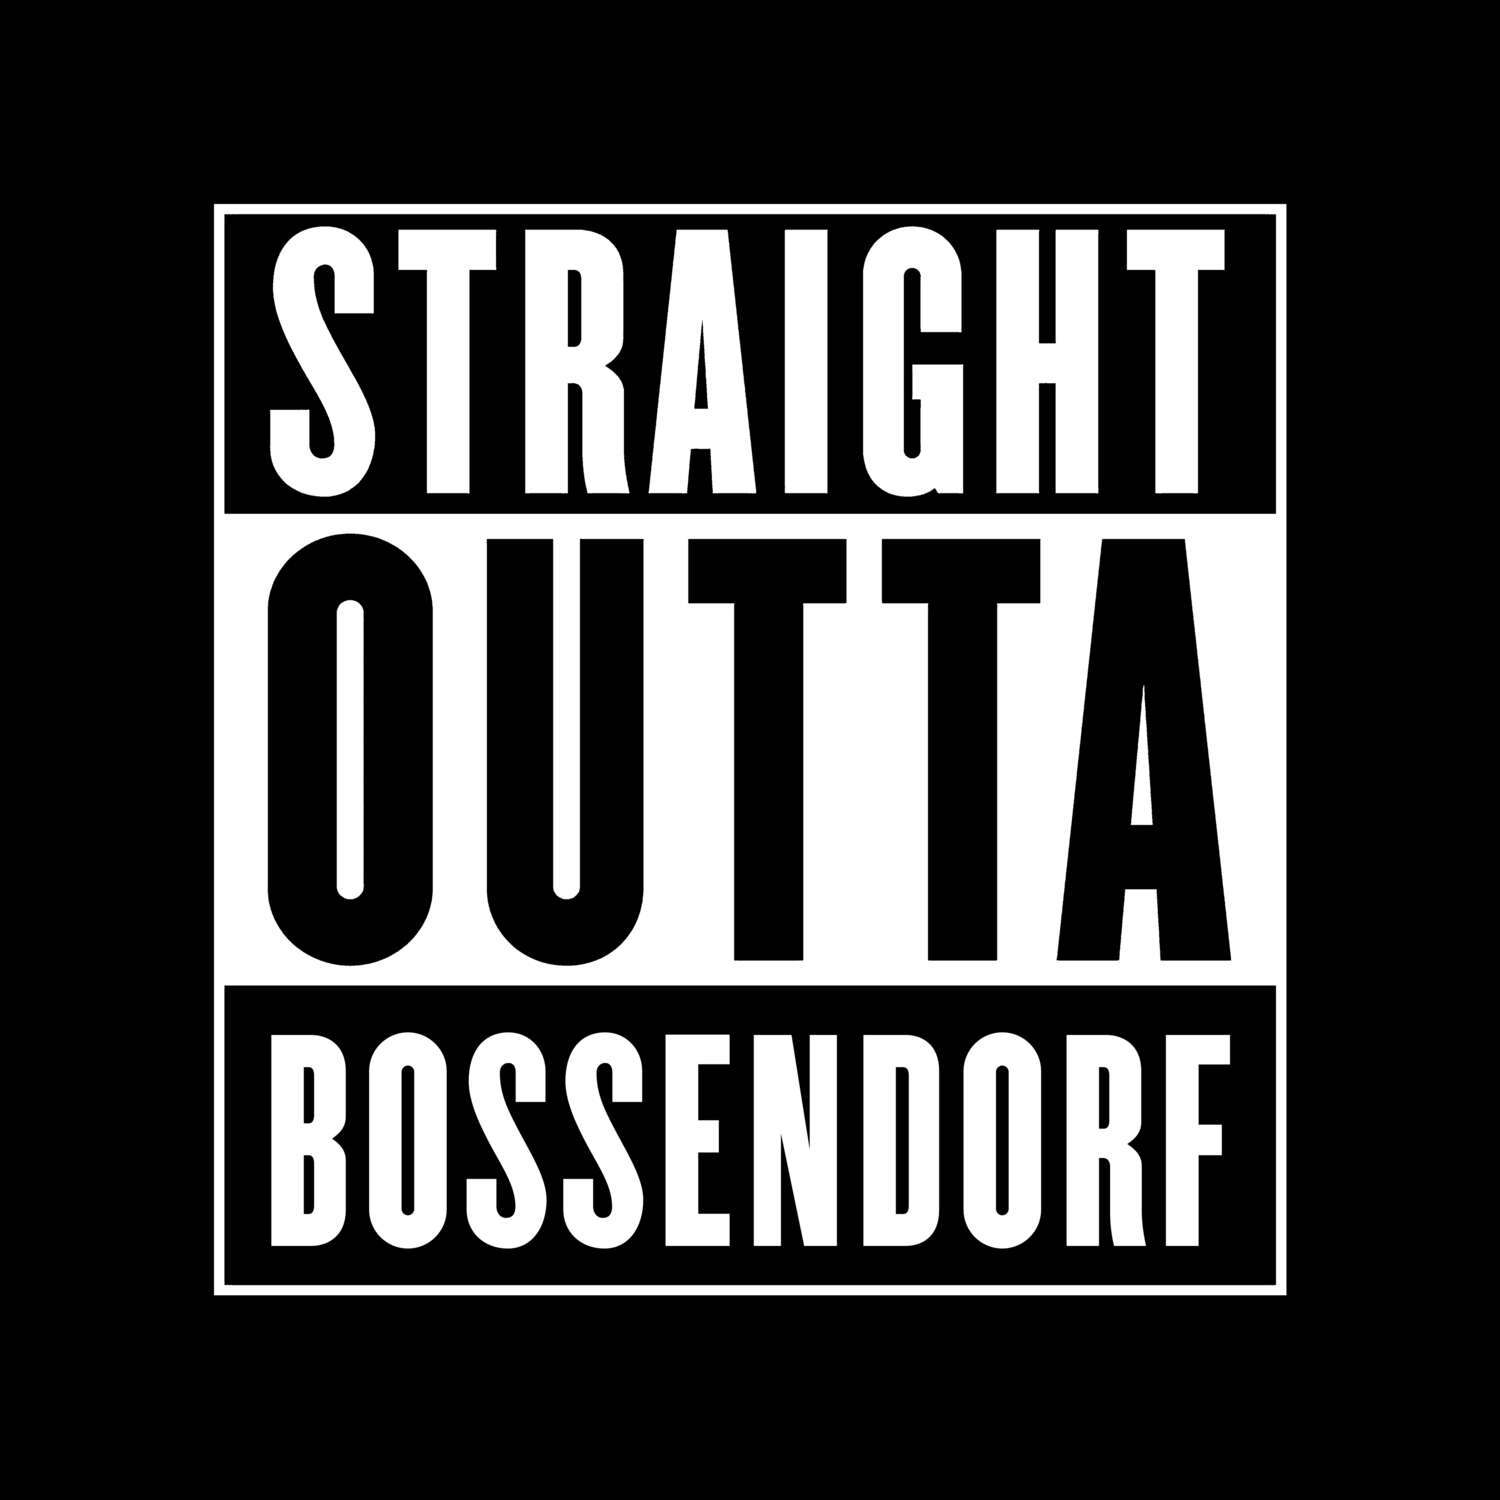 Bossendorf T-Shirt »Straight Outta«